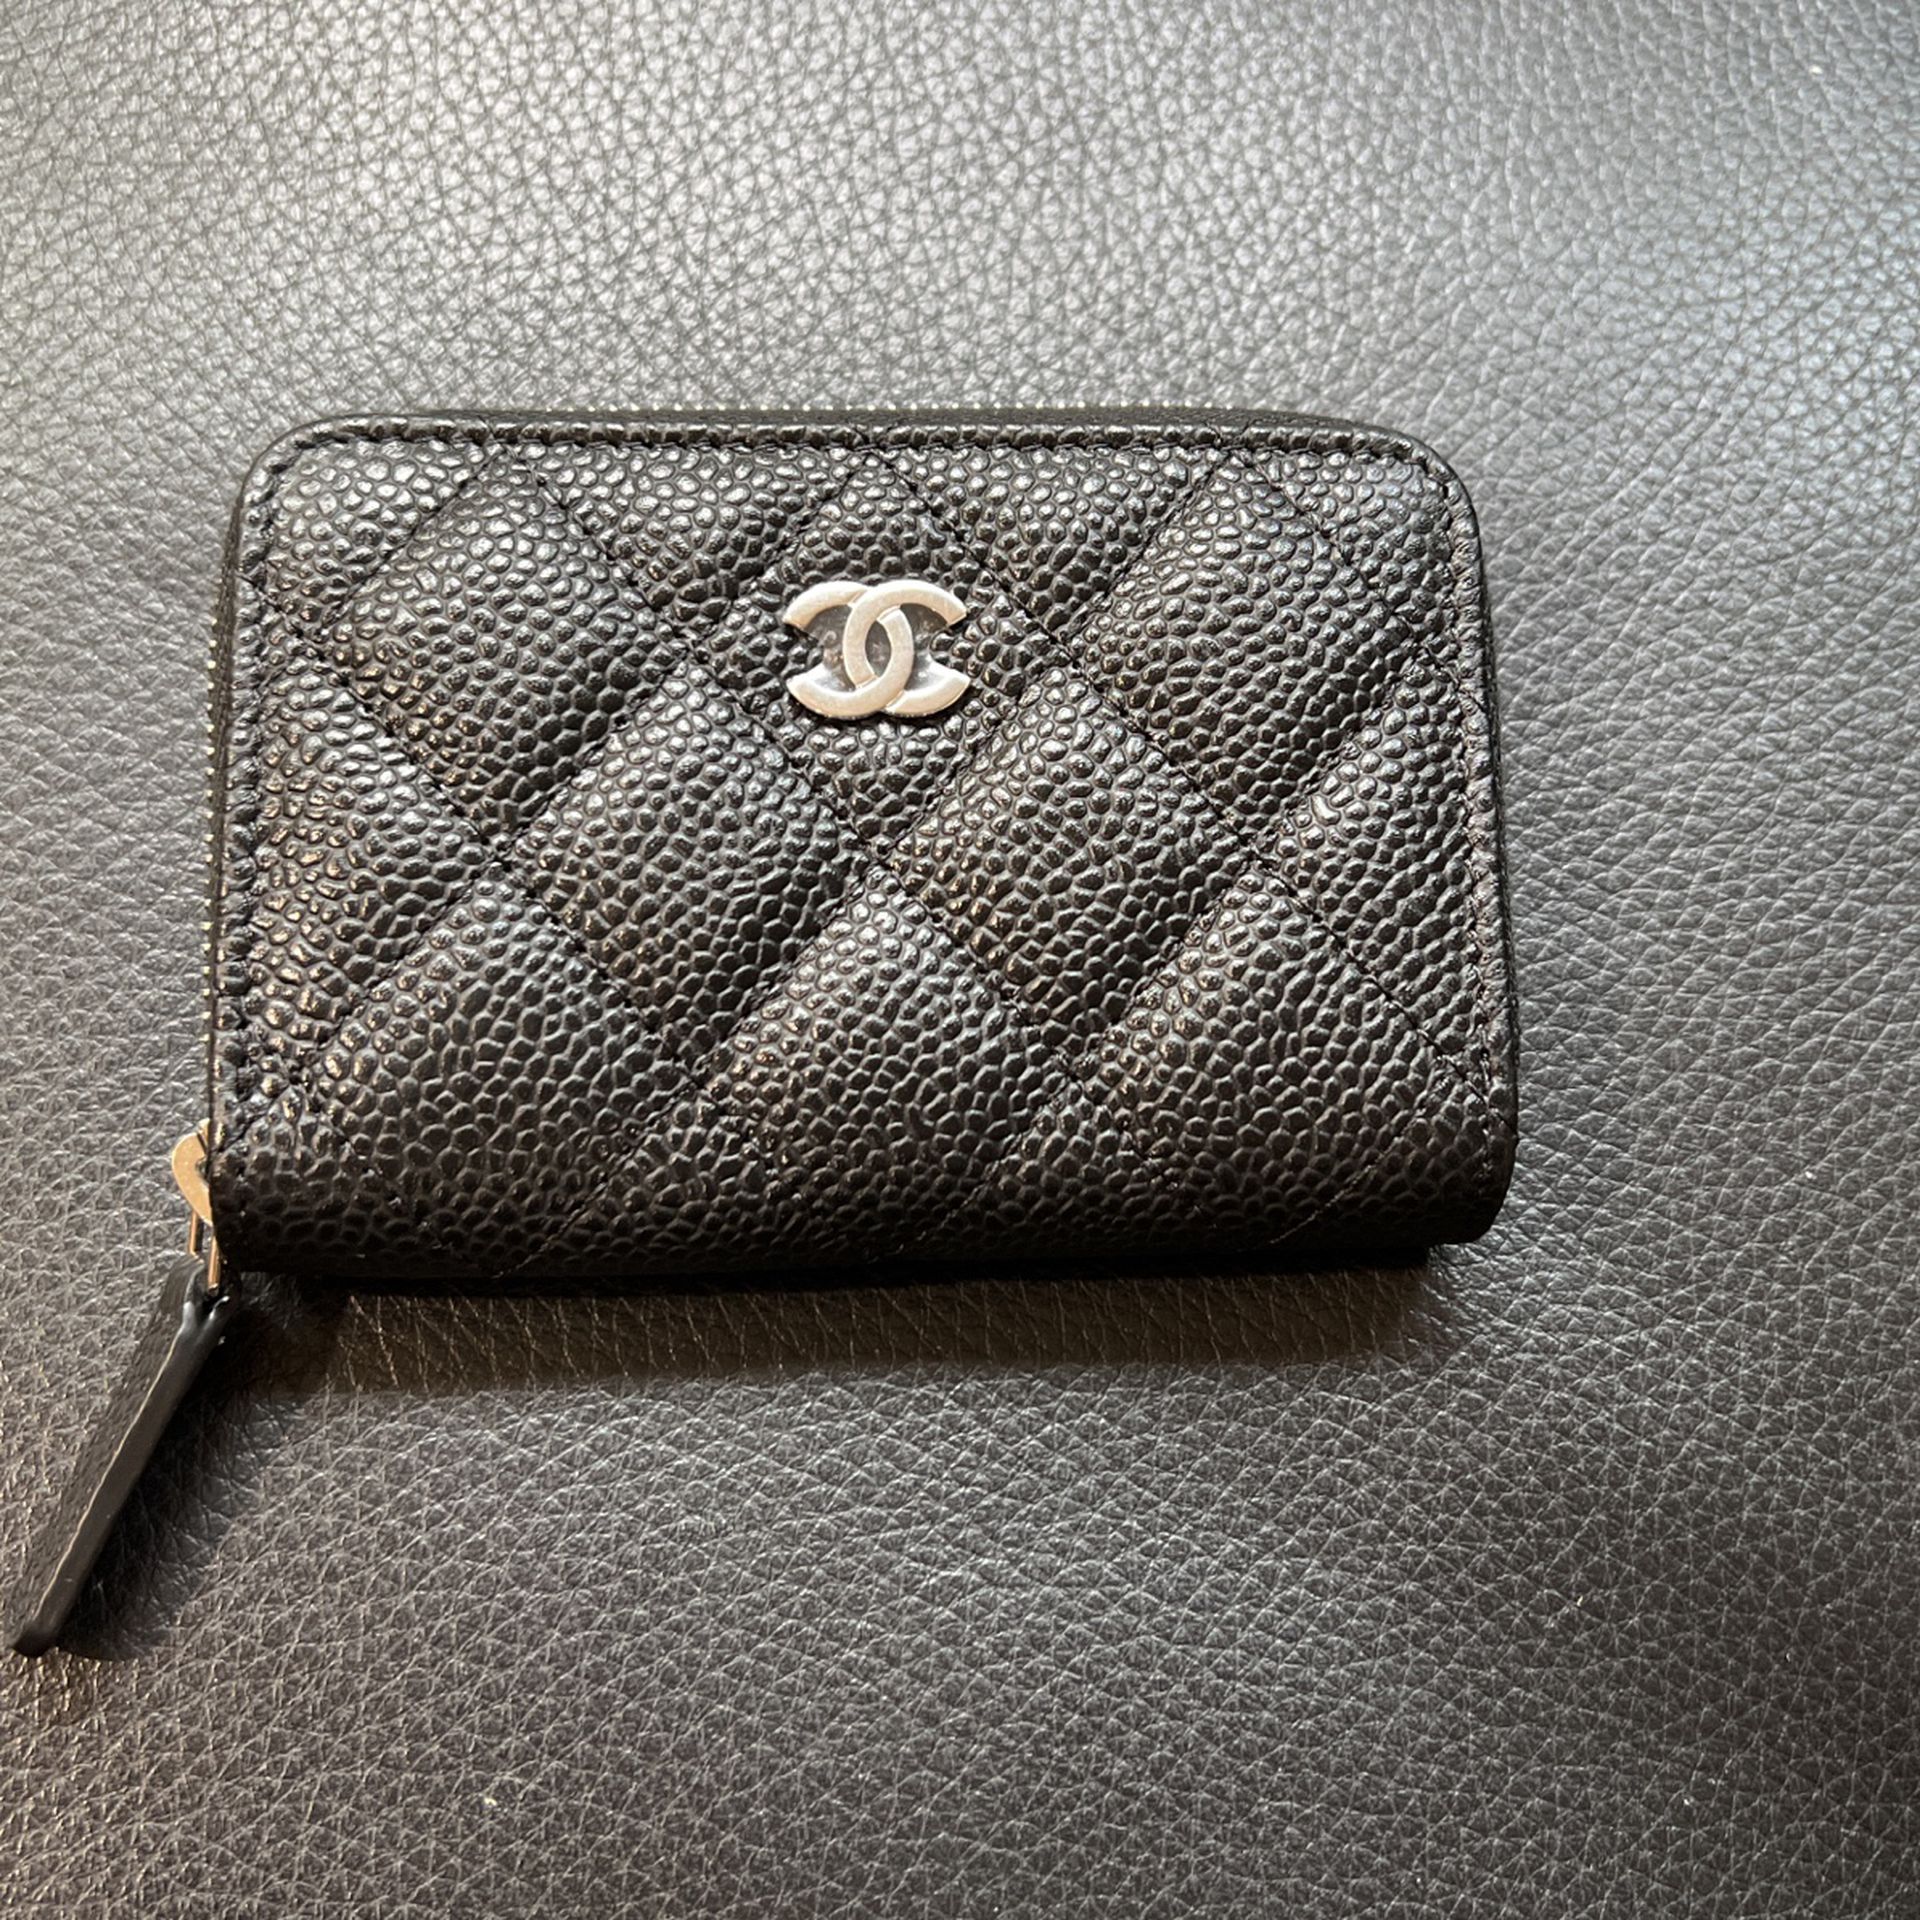 Chanel Vintage Zip Wallet for Sale in Fort Lauderdale, FL - OfferUp